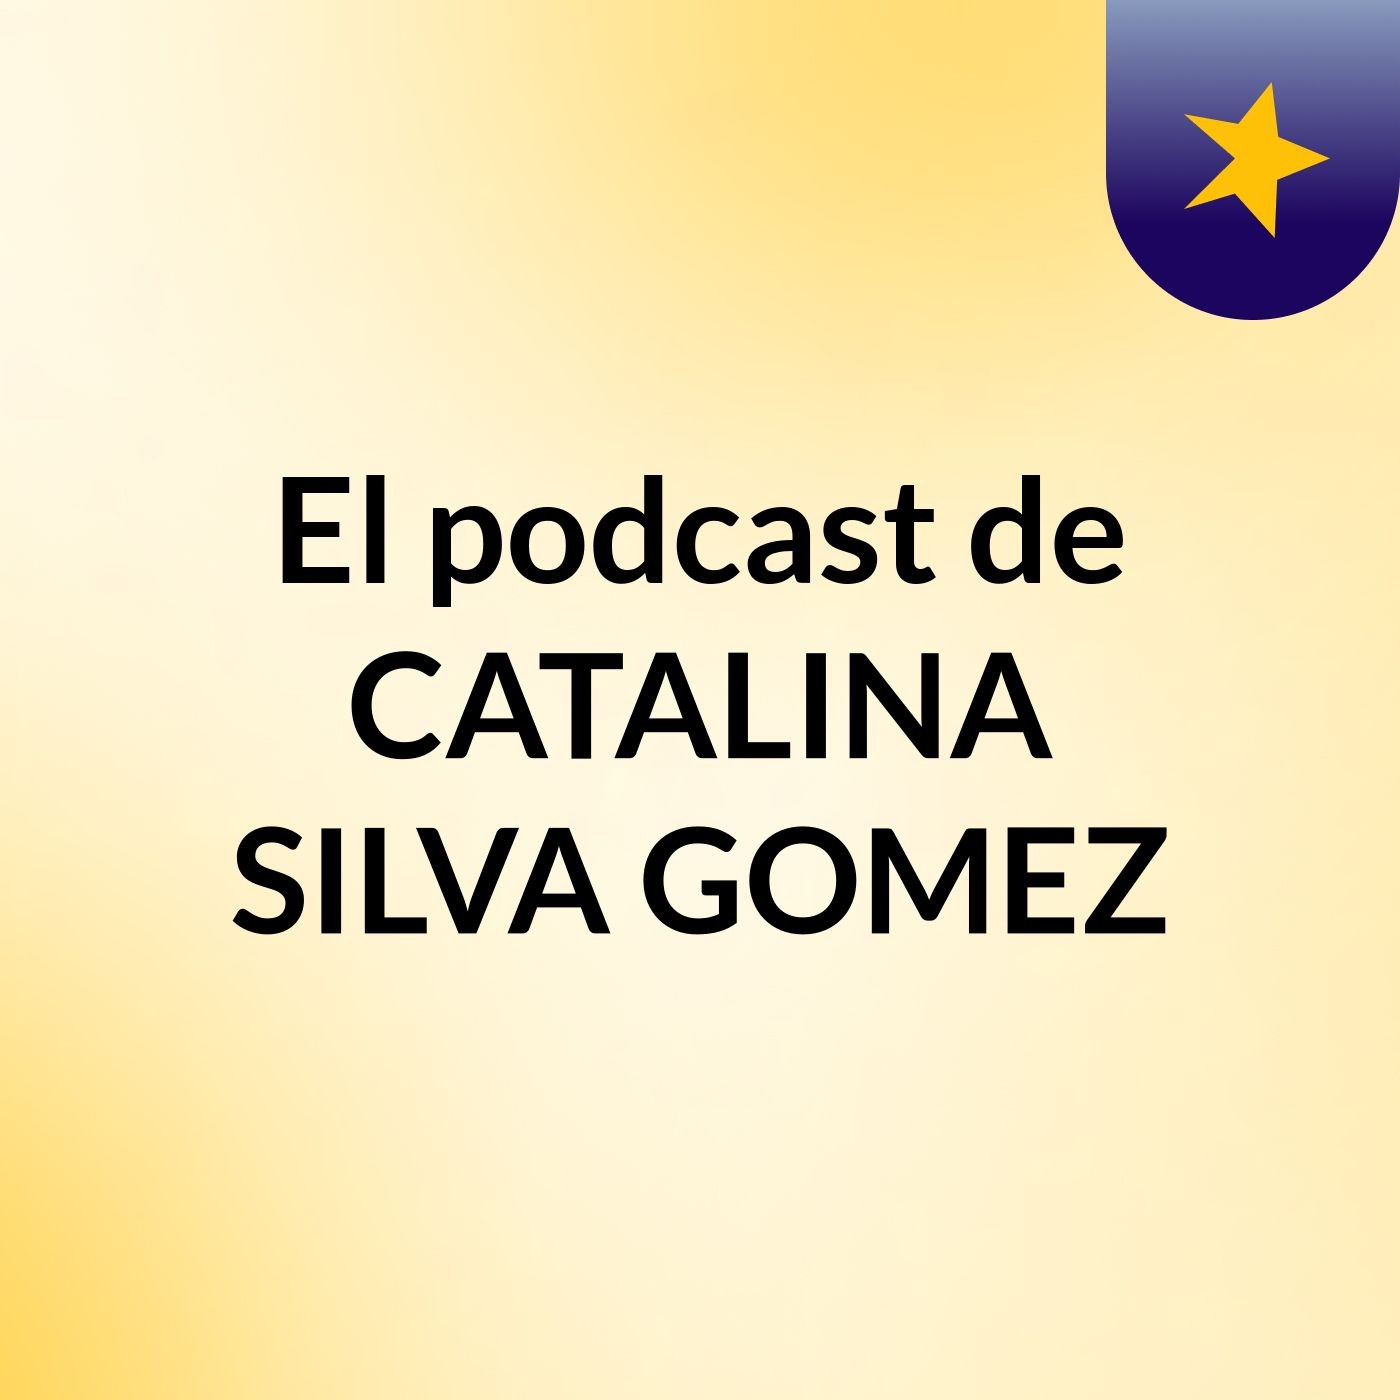 Episodio 2 - El podcast de CATALINA SILVA GOMEZ